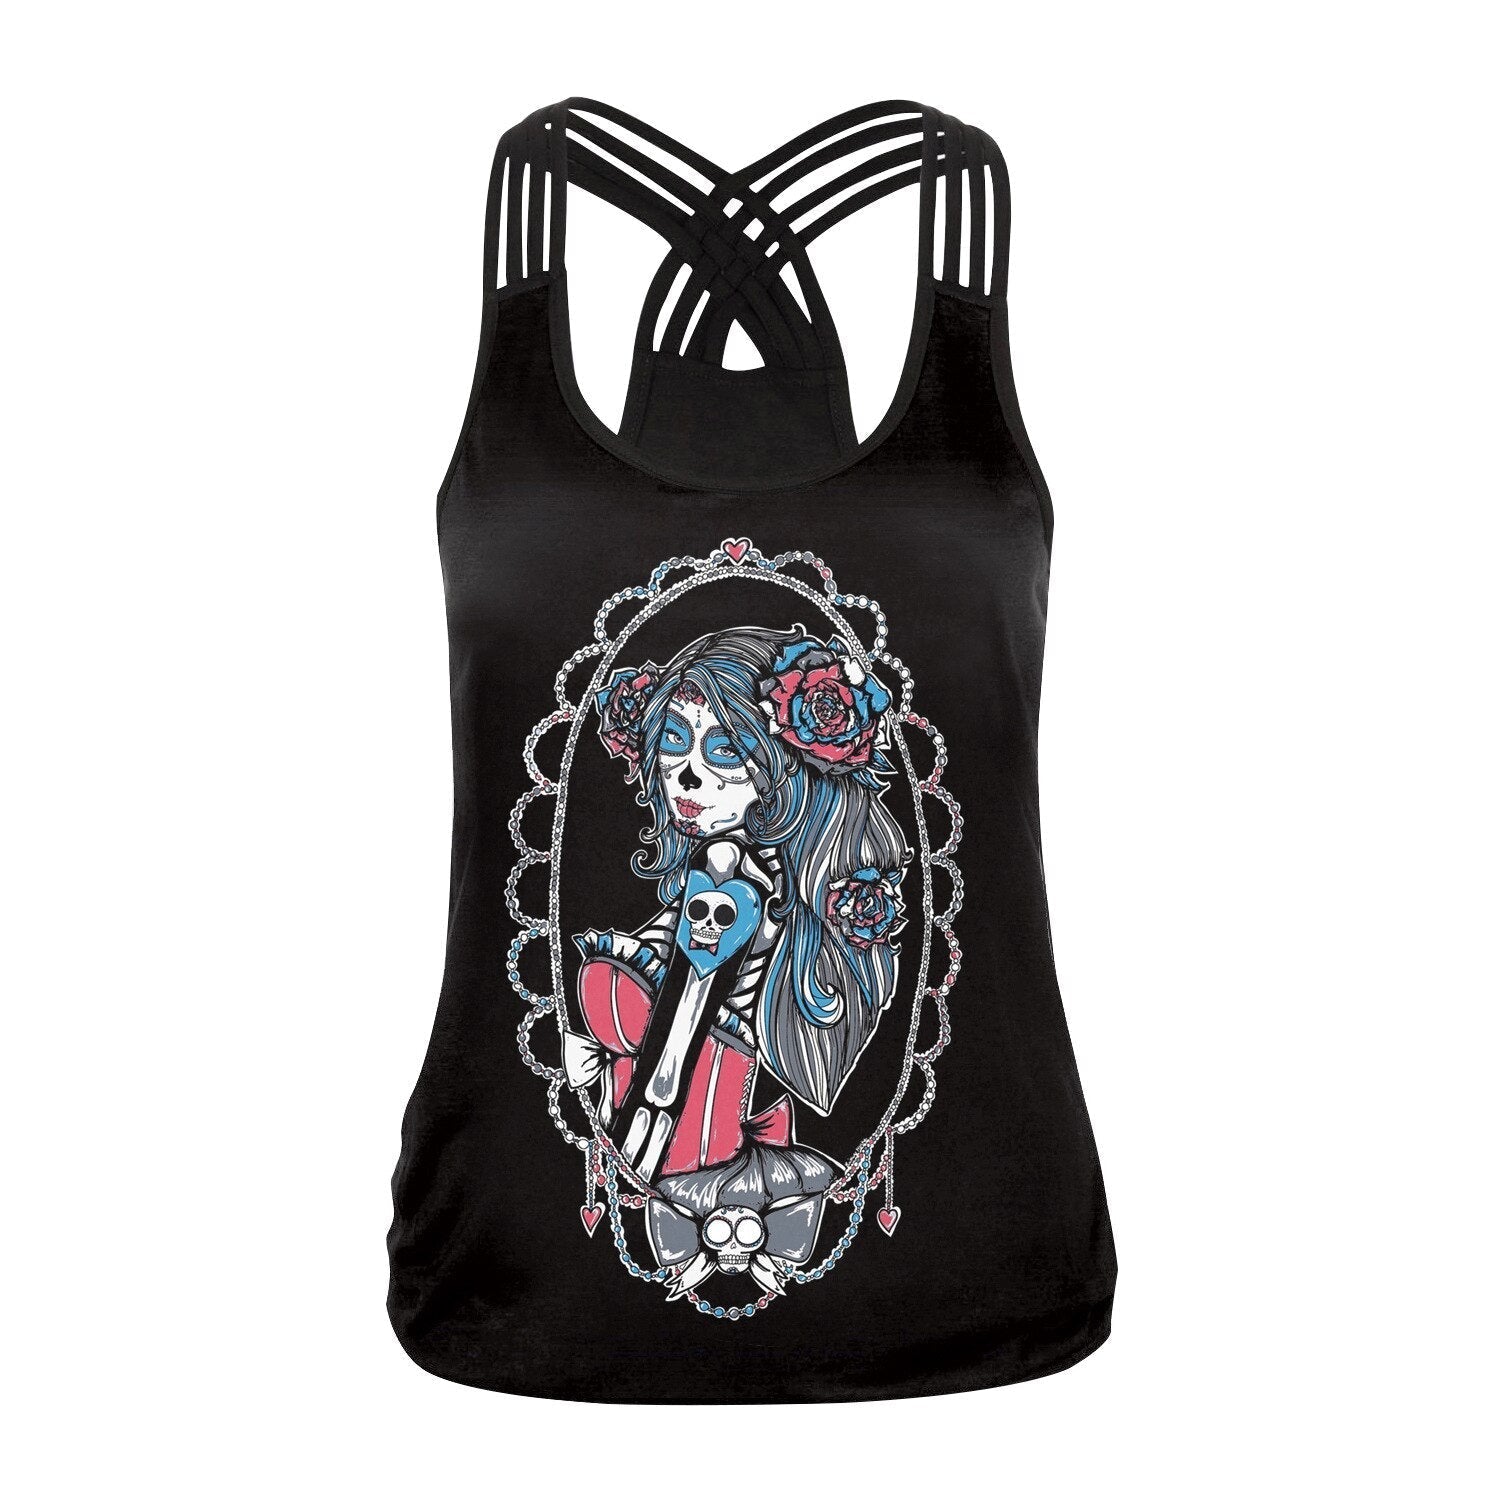 Sugar Skull Tank Top for Women / Halloween Fashion / Gothic Style Back Cross Sleeveless Vest #9 - HARD'N'HEAVY